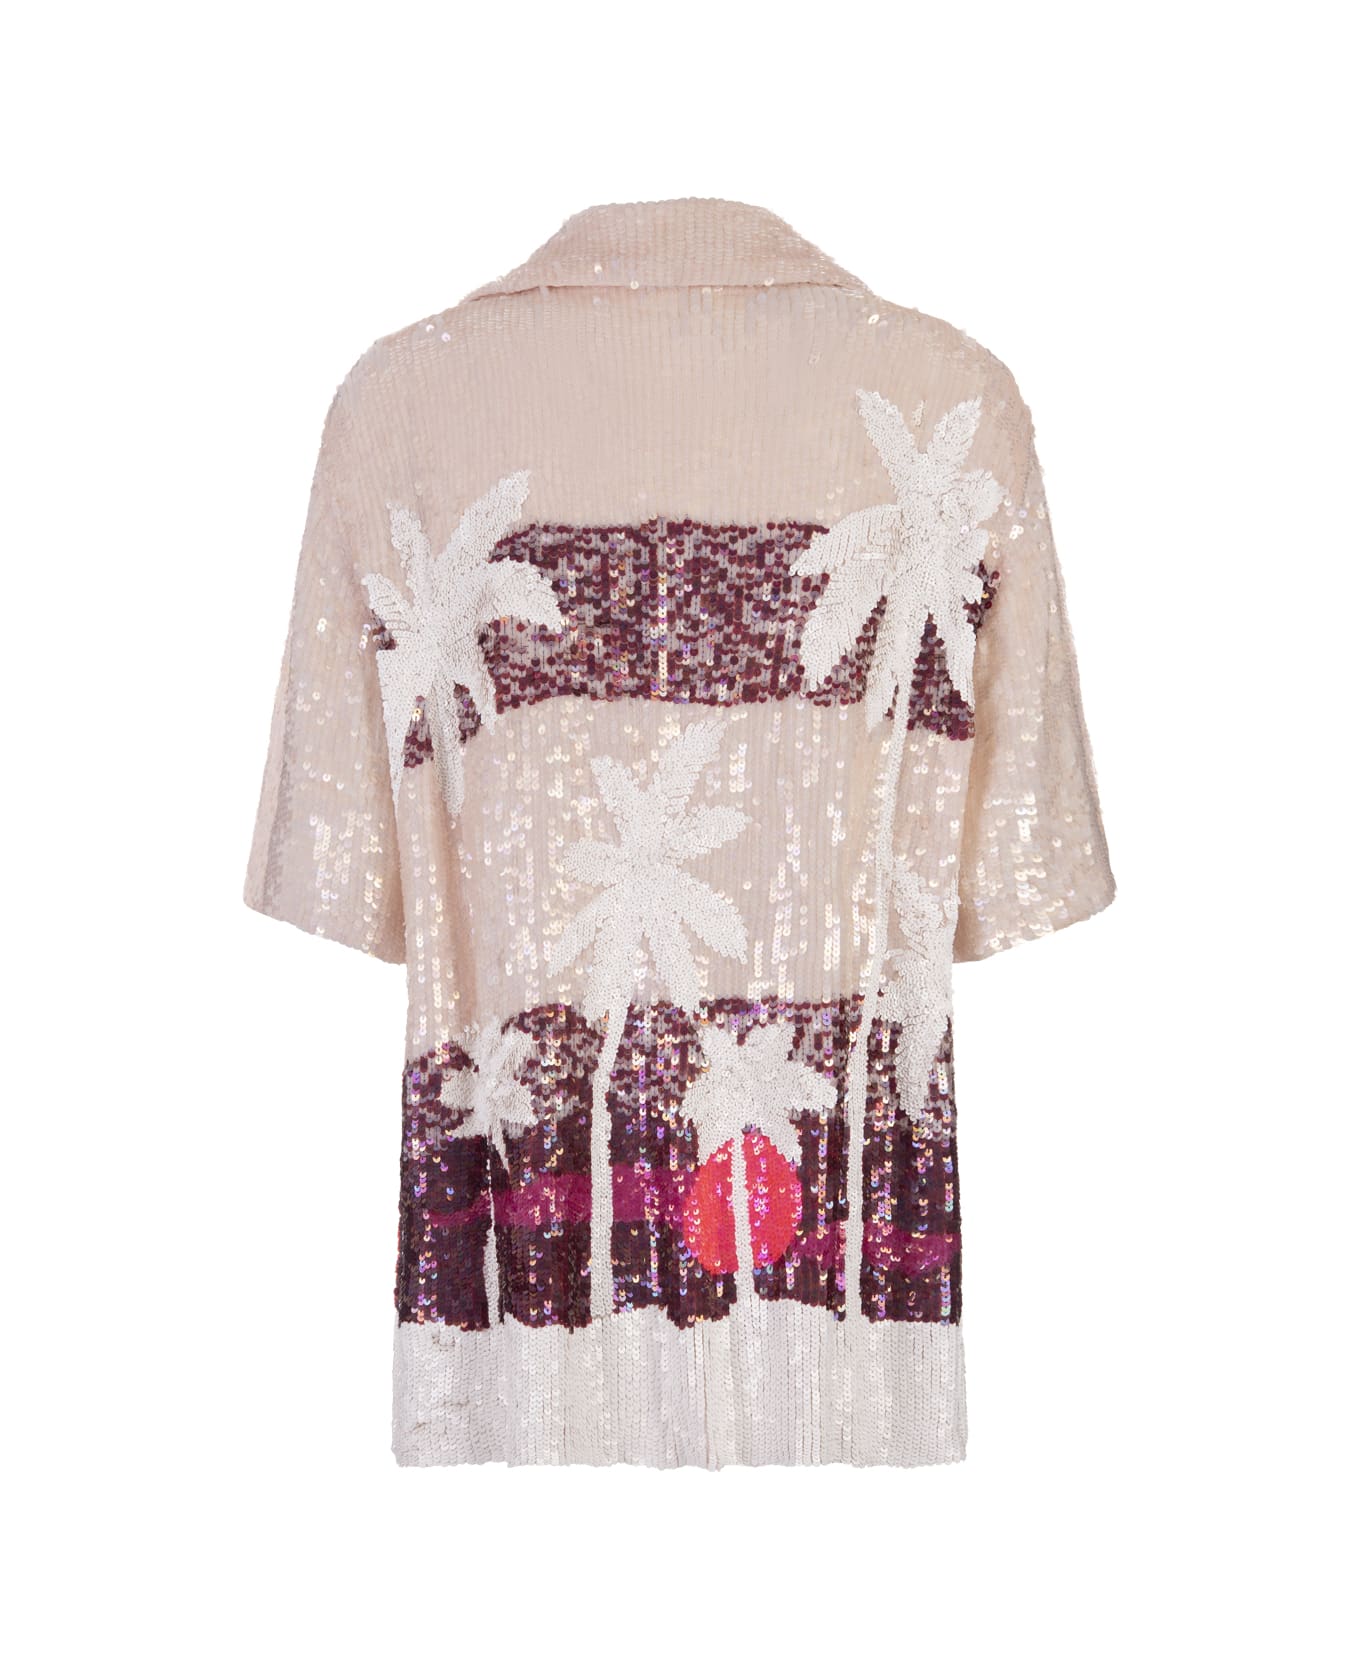 Parosh Pink Tropical Patterns Casual Style Short Sleeves Shirt - Pink